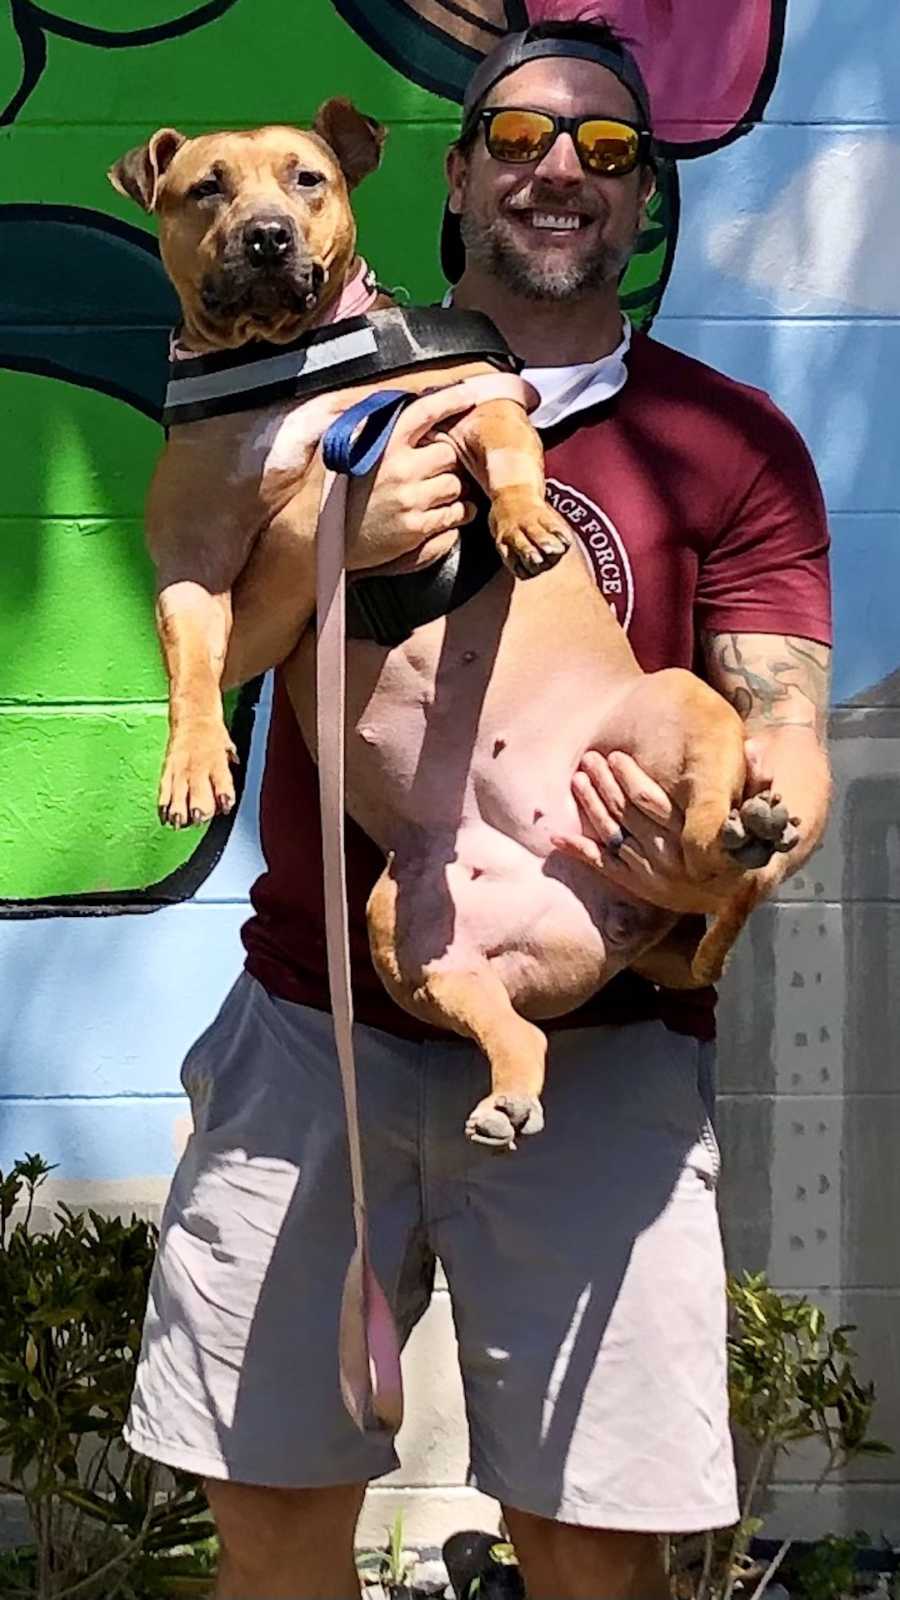 man holding a dog